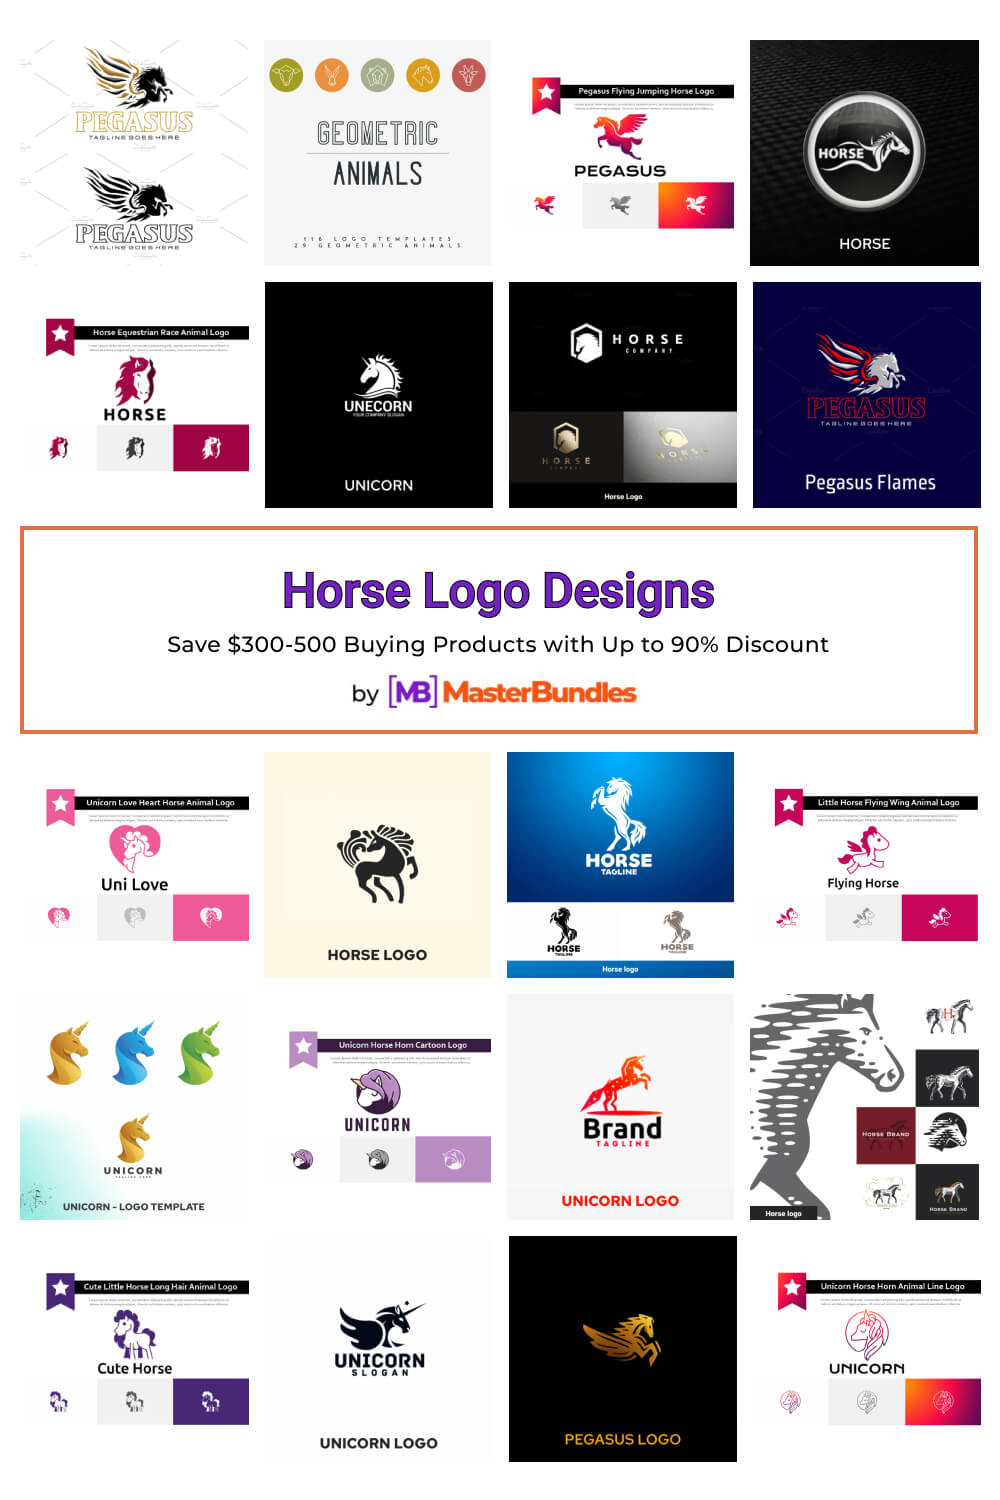 horse logo designs pinterest image.